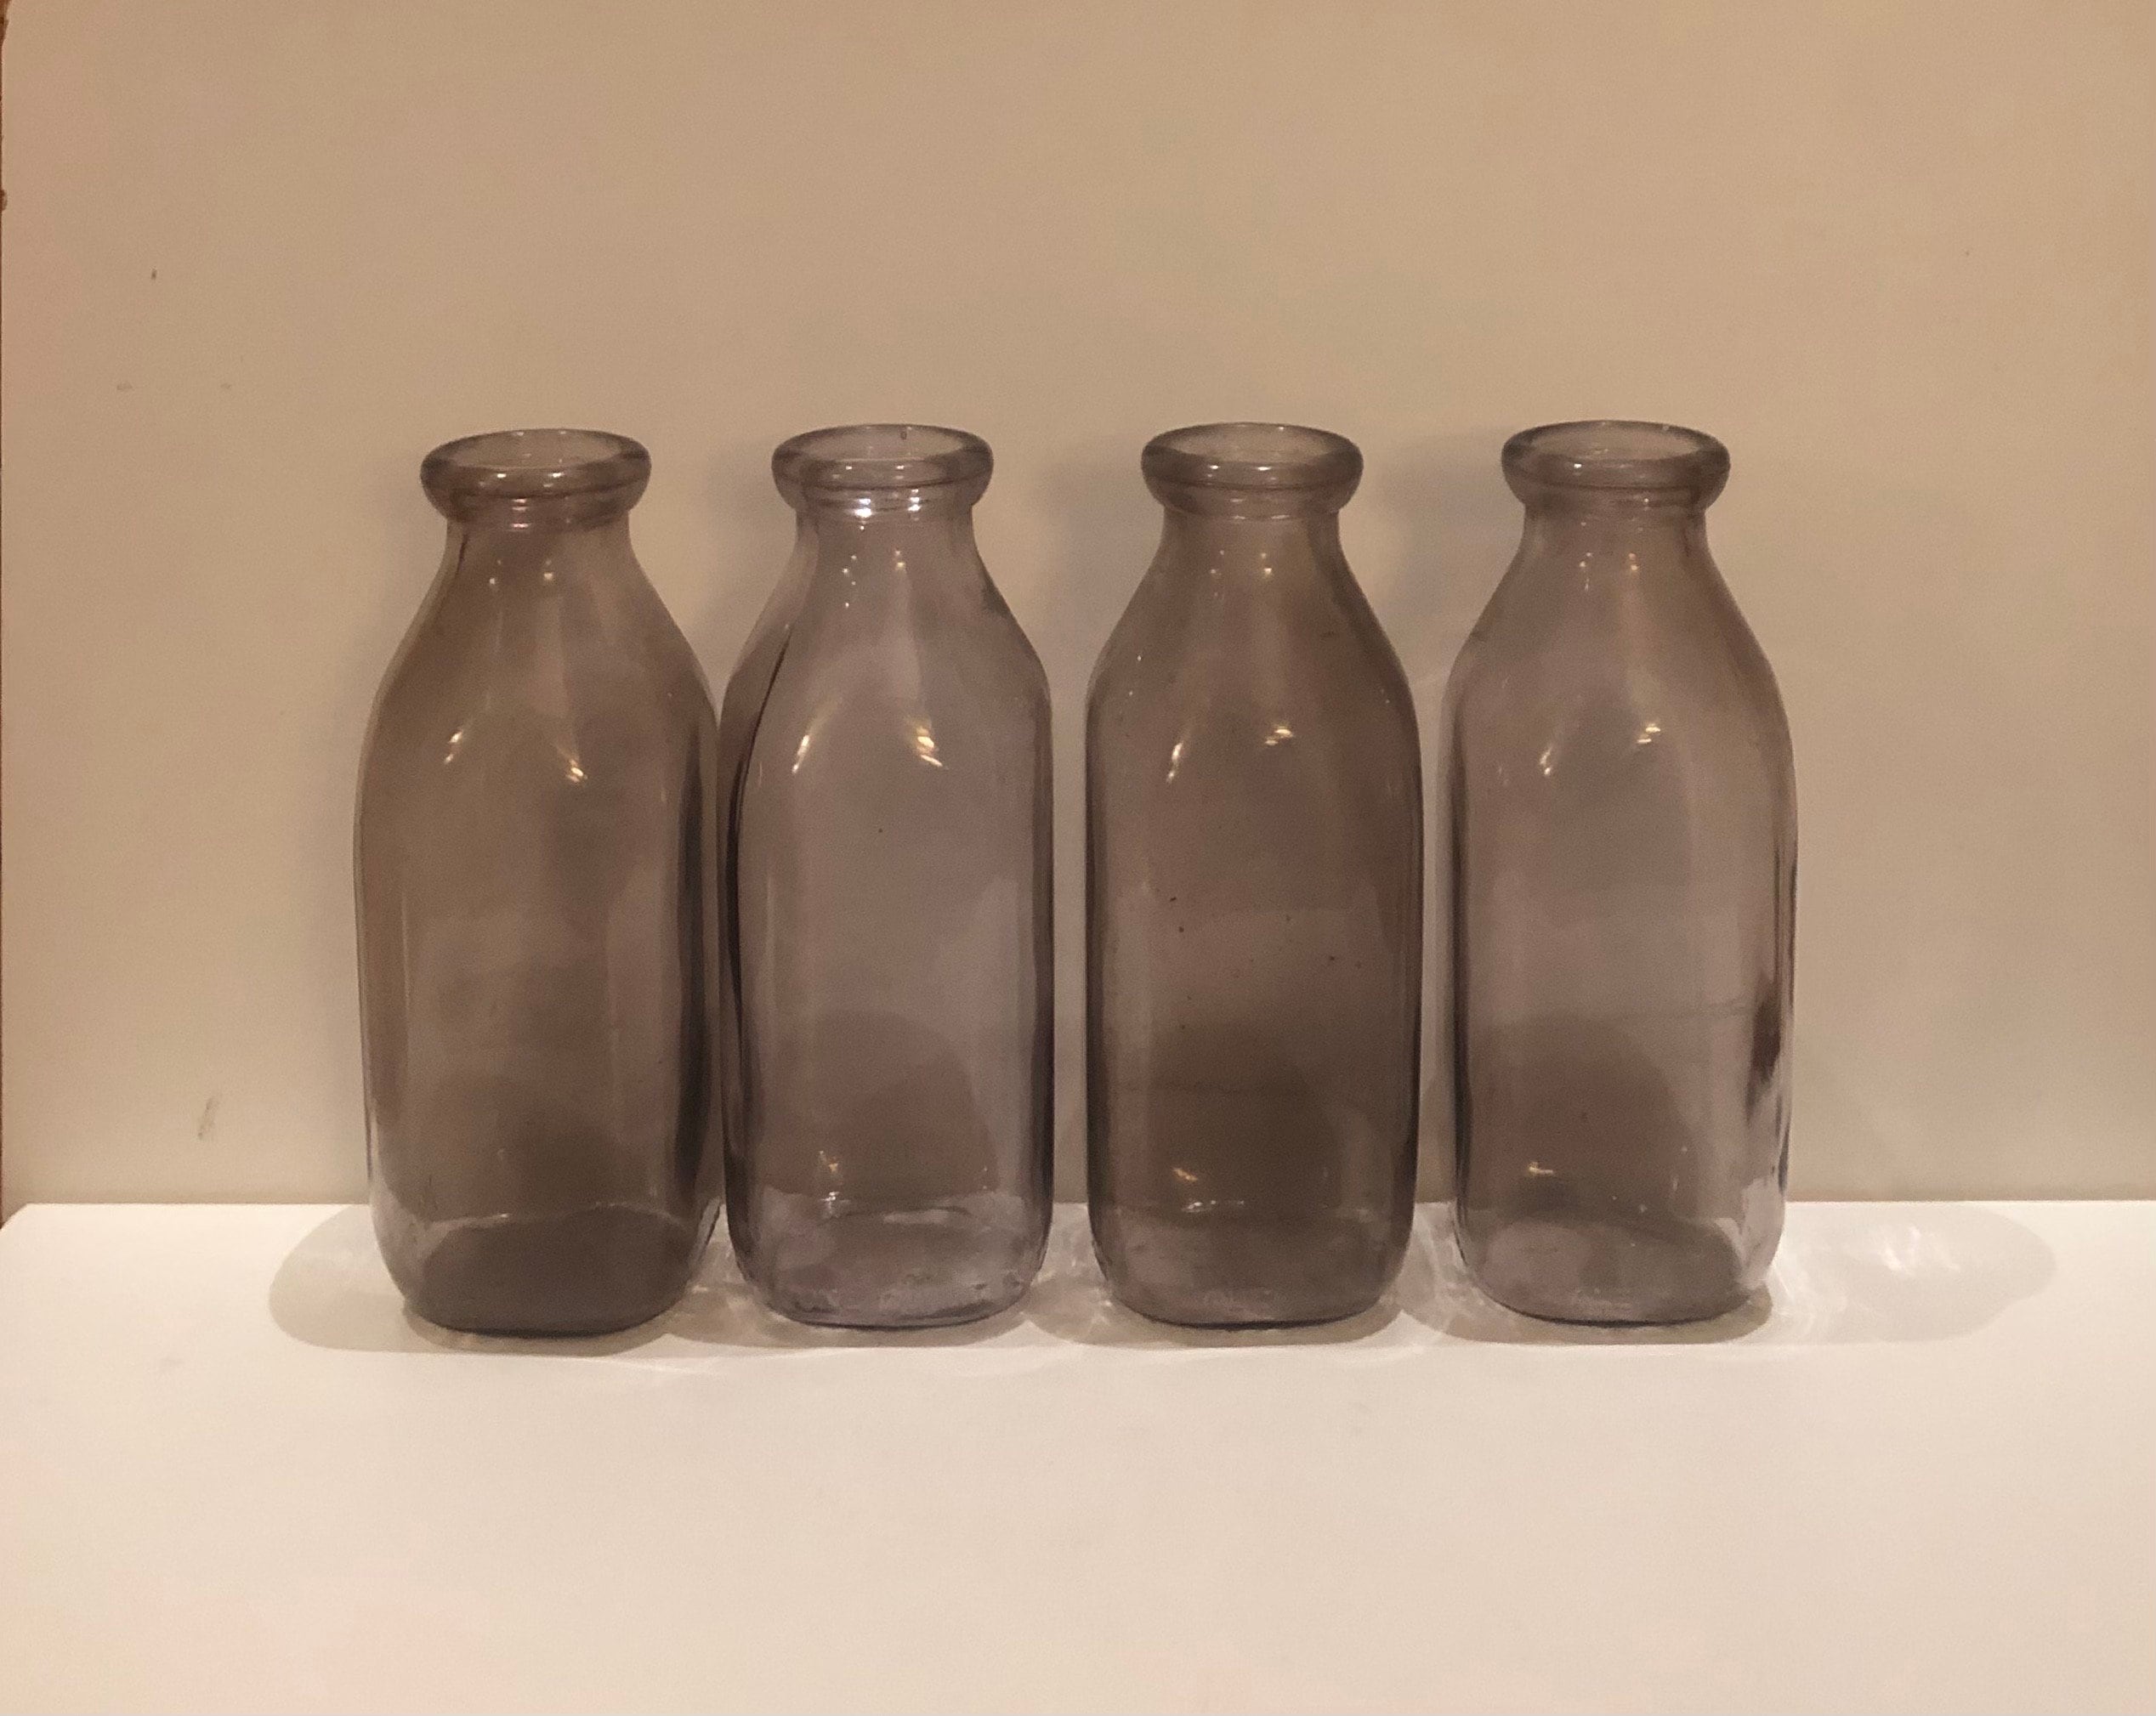 Clear Glass Milk Bottles with Striped Straws (Per Dozen